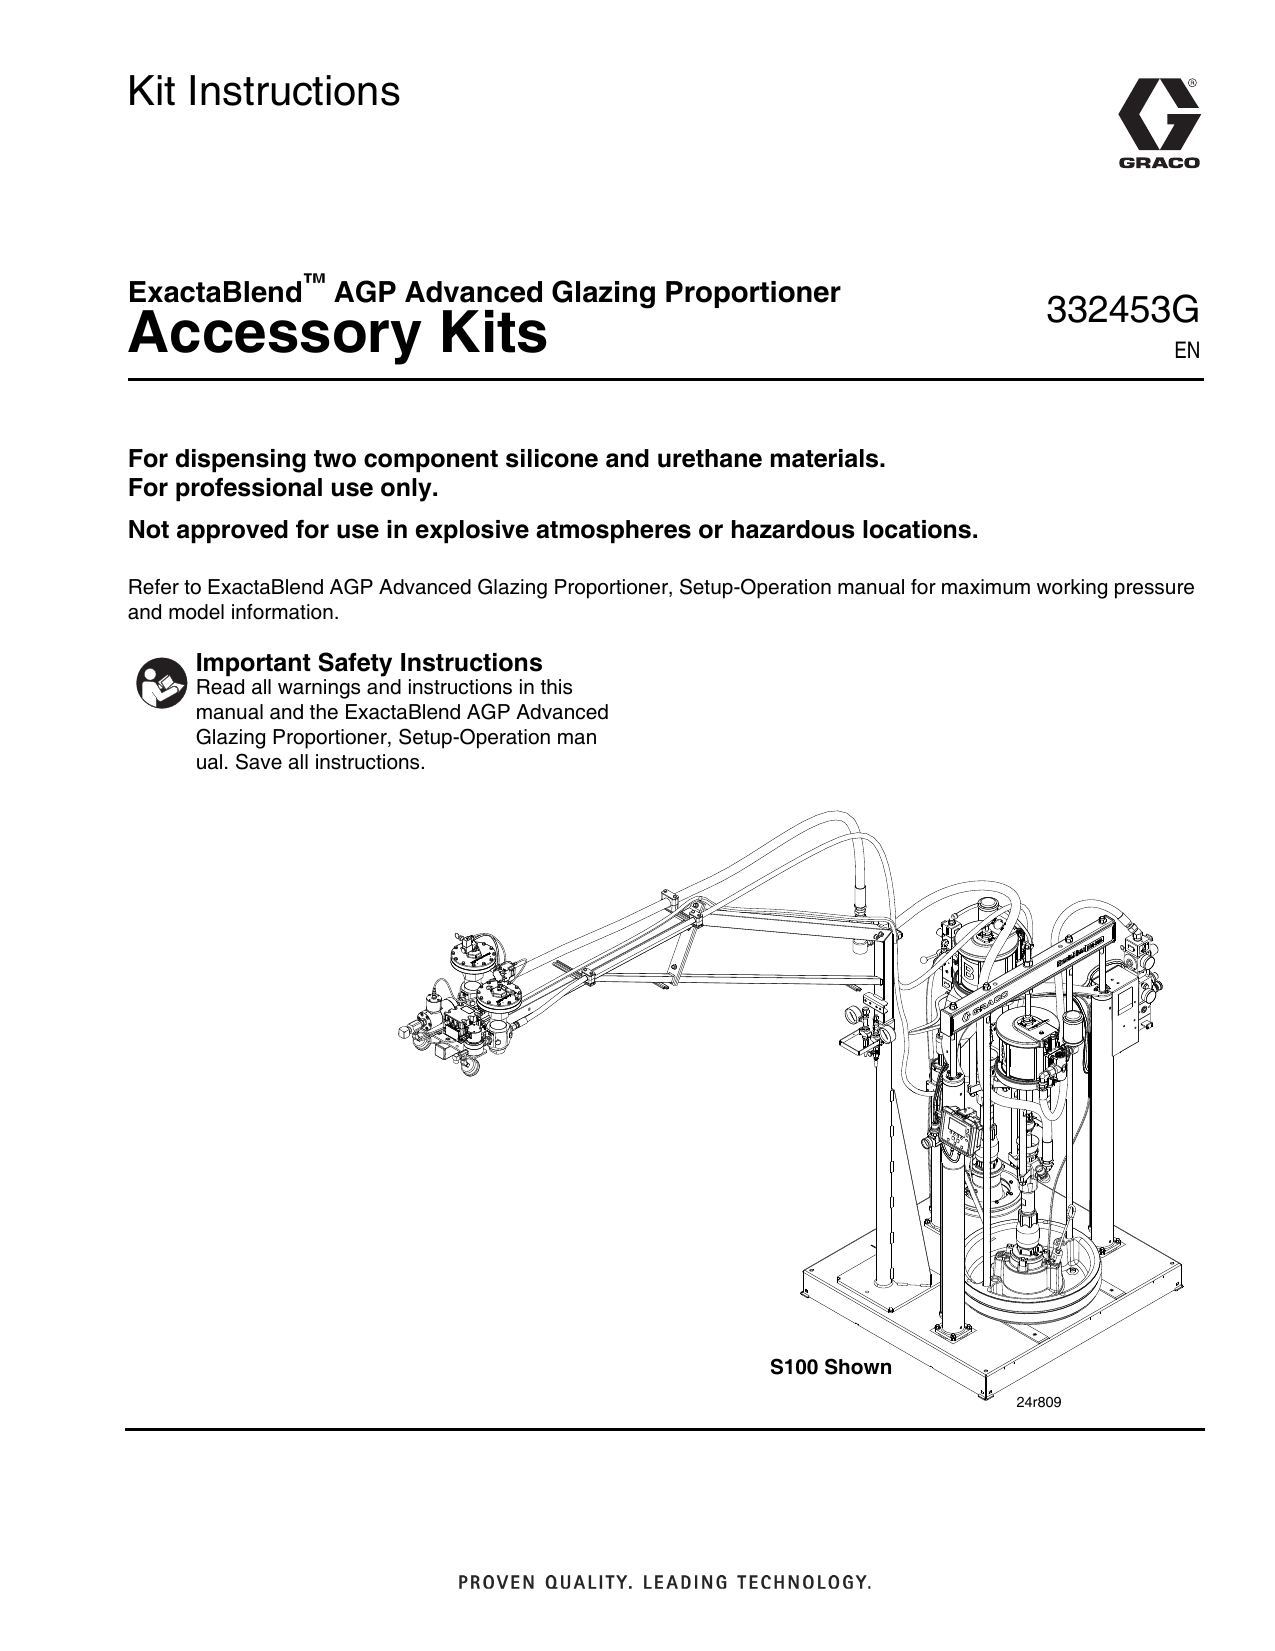 Graco 332453G - ExactaBlend AGP Advanced Glazing Proportioner - Accessories Instructions | Manualzz